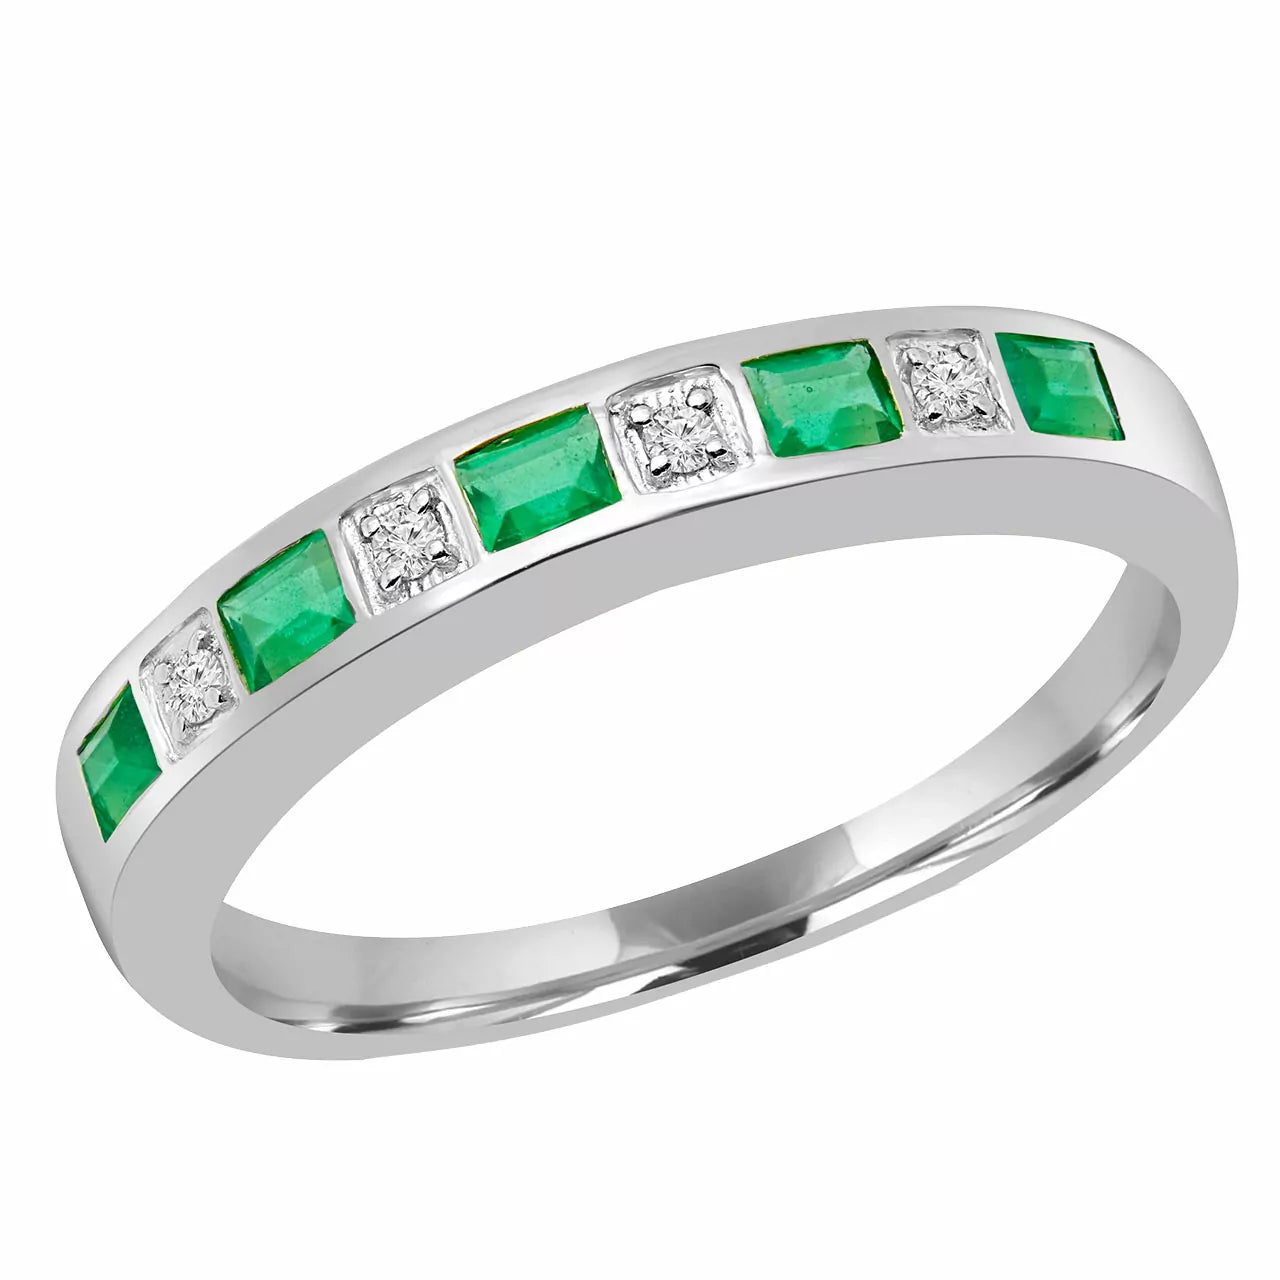 Emerald & diamond wedding band 0.64 (ctw) in 10k white gold